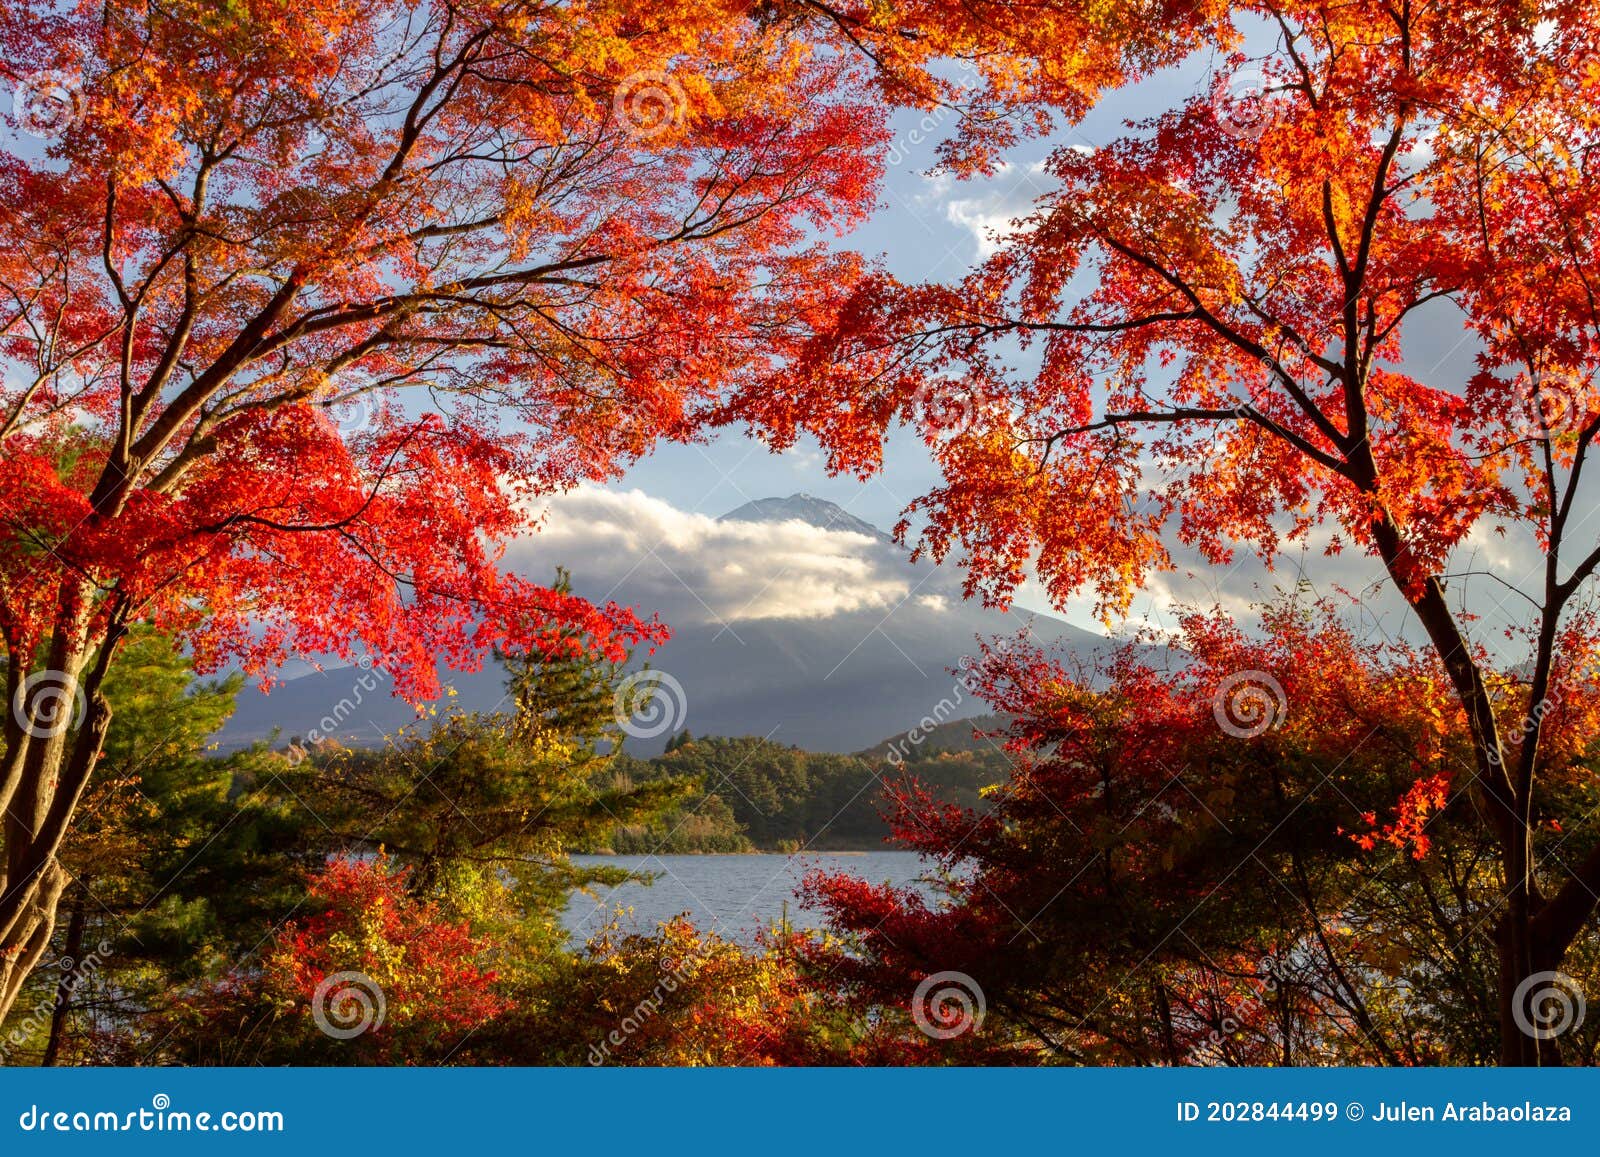 view of mountain fuji in autumn japon